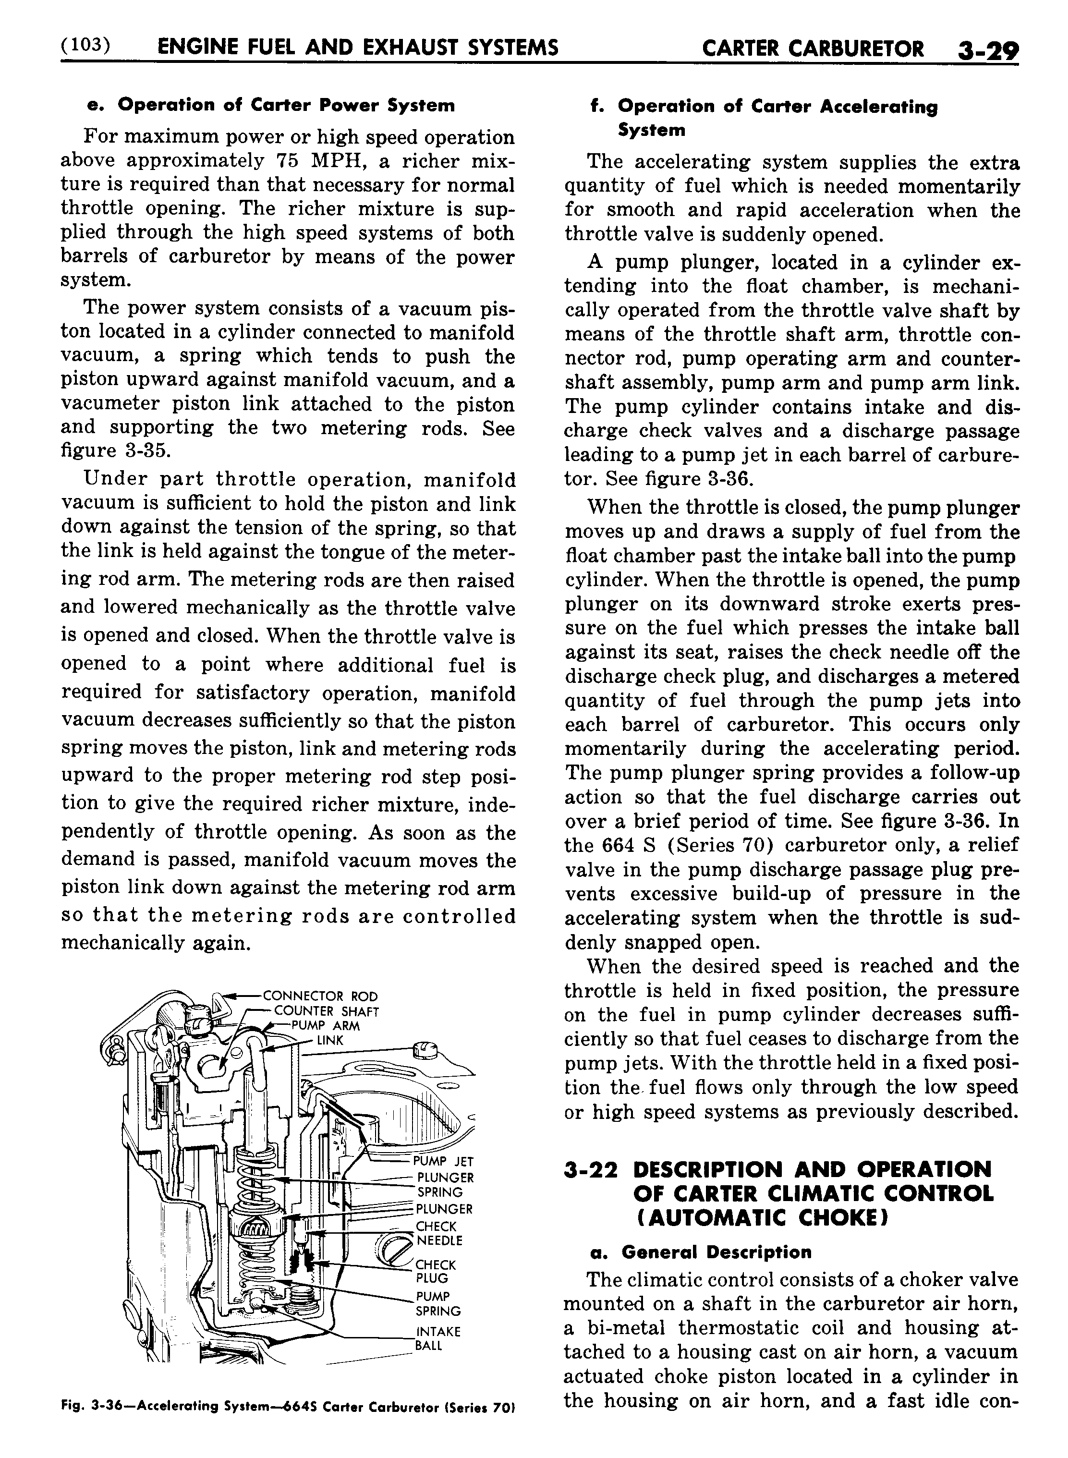 n_04 1948 Buick Shop Manual - Engine Fuel & Exhaust-029-029.jpg